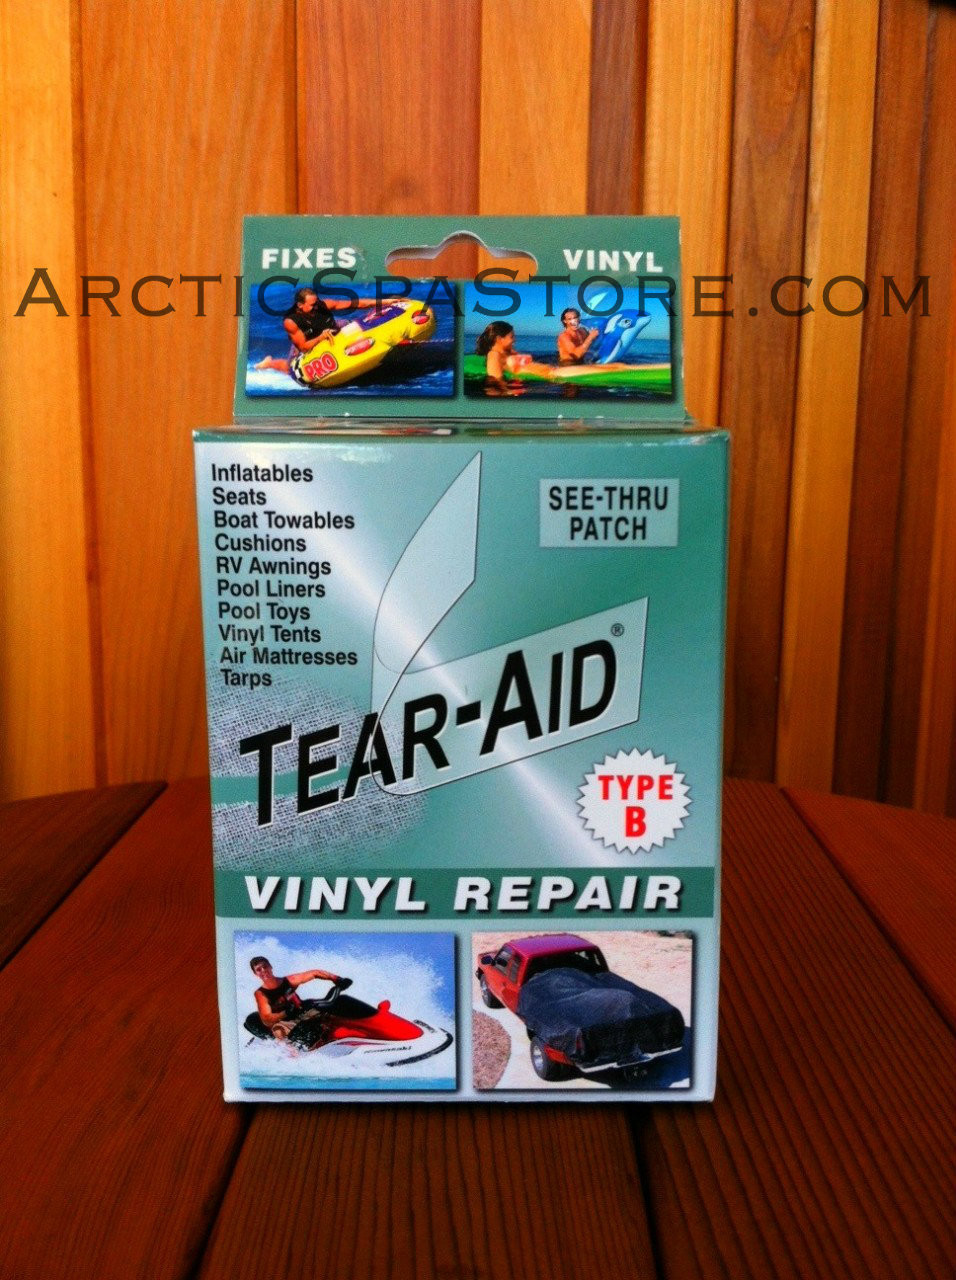 MCTRHG Vinyl Repair Kit, Air Mattress Repair Patch Kit, Vinyl Patch Kit, Suitable for Vinyl Tents, Air Mattresses, Awnings, Vinyl and Vinyl Coated